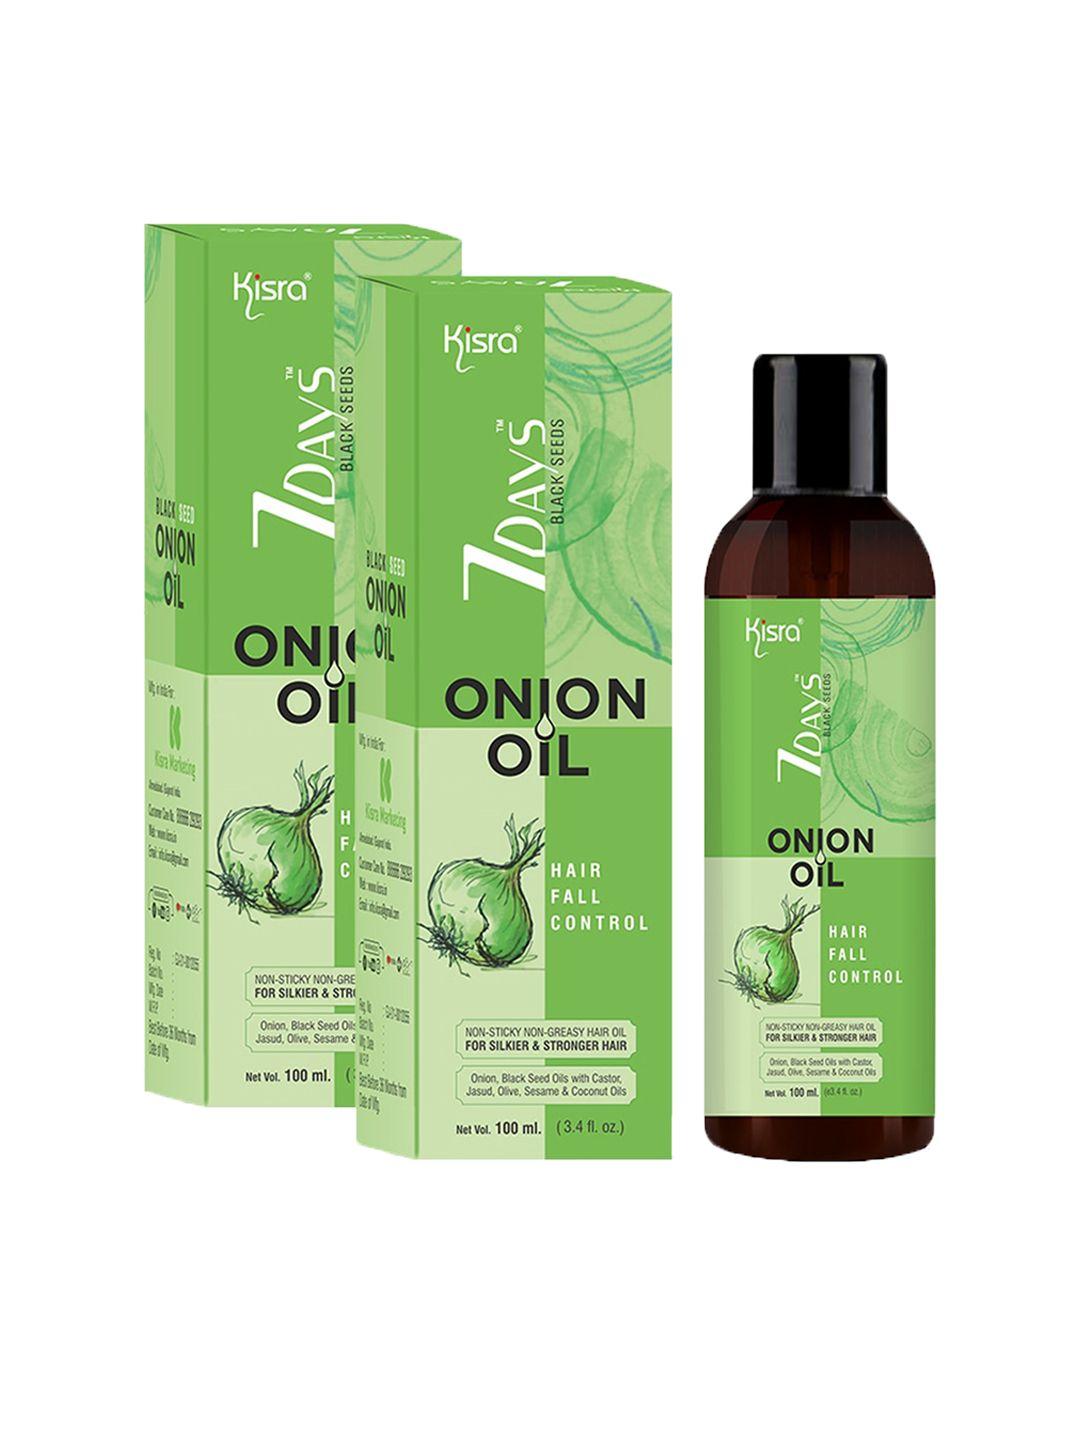 kisra set of 2 hairfall control onion hair oil - 100 ml each